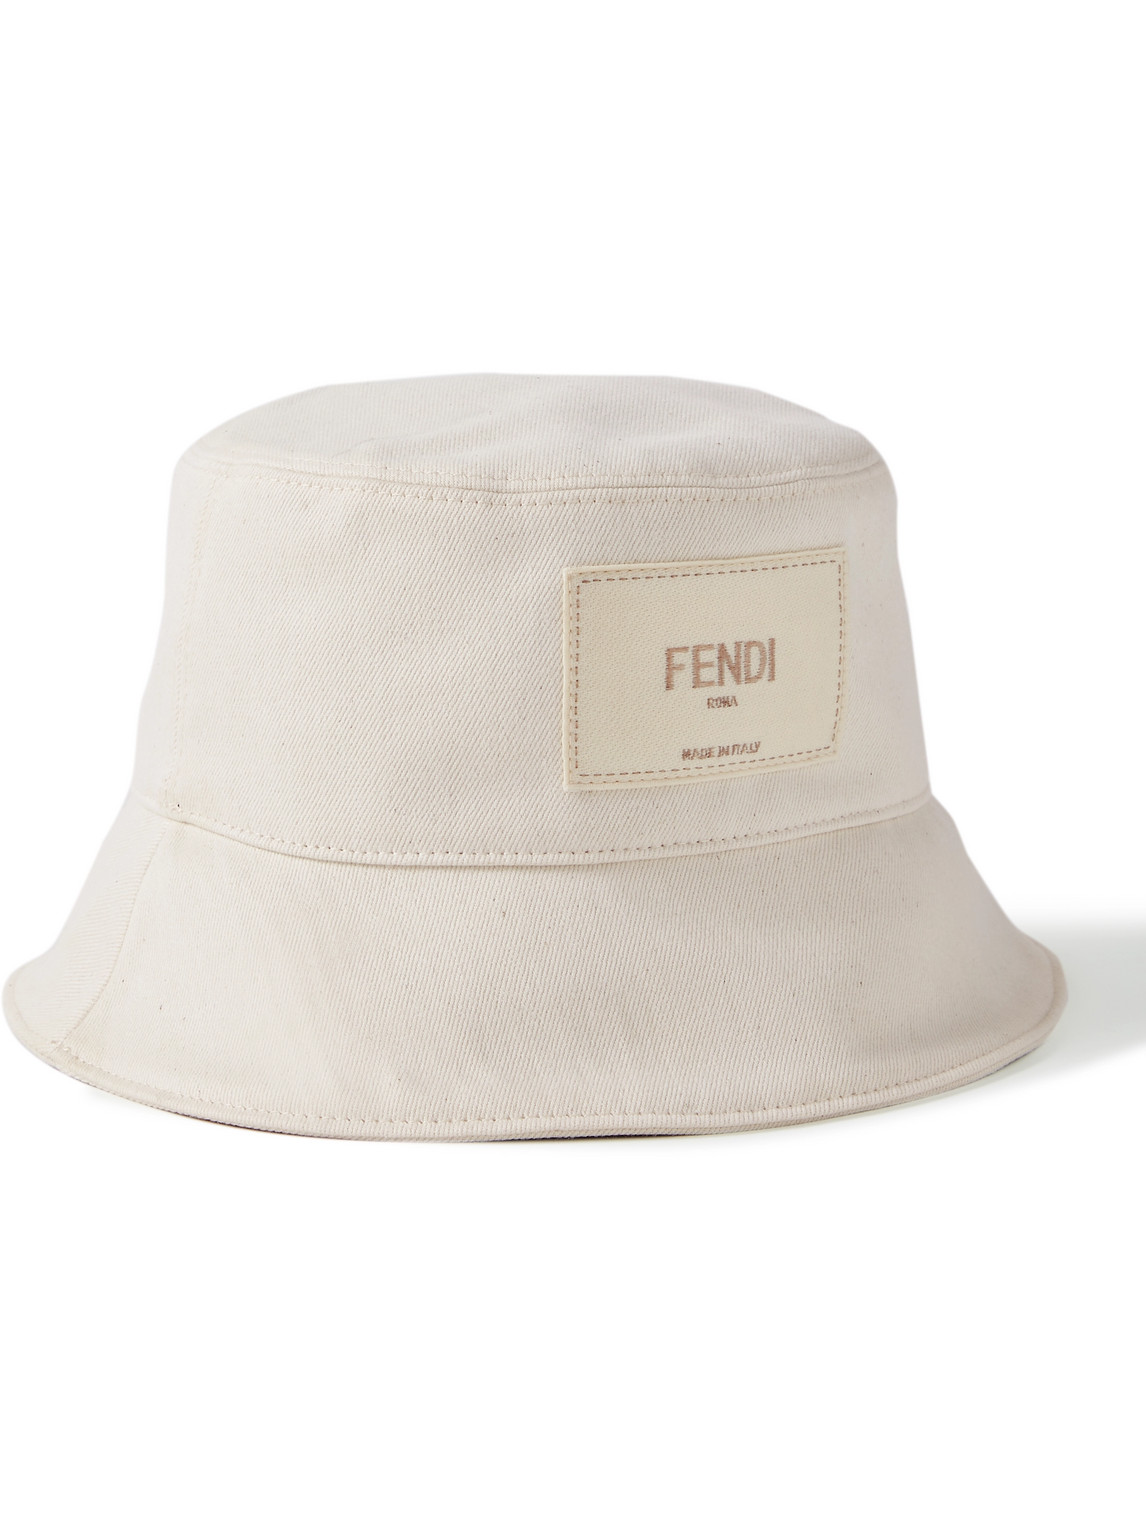 Fendi Logo-Appliquéd Cotton-Blend Twill Bucket Hat